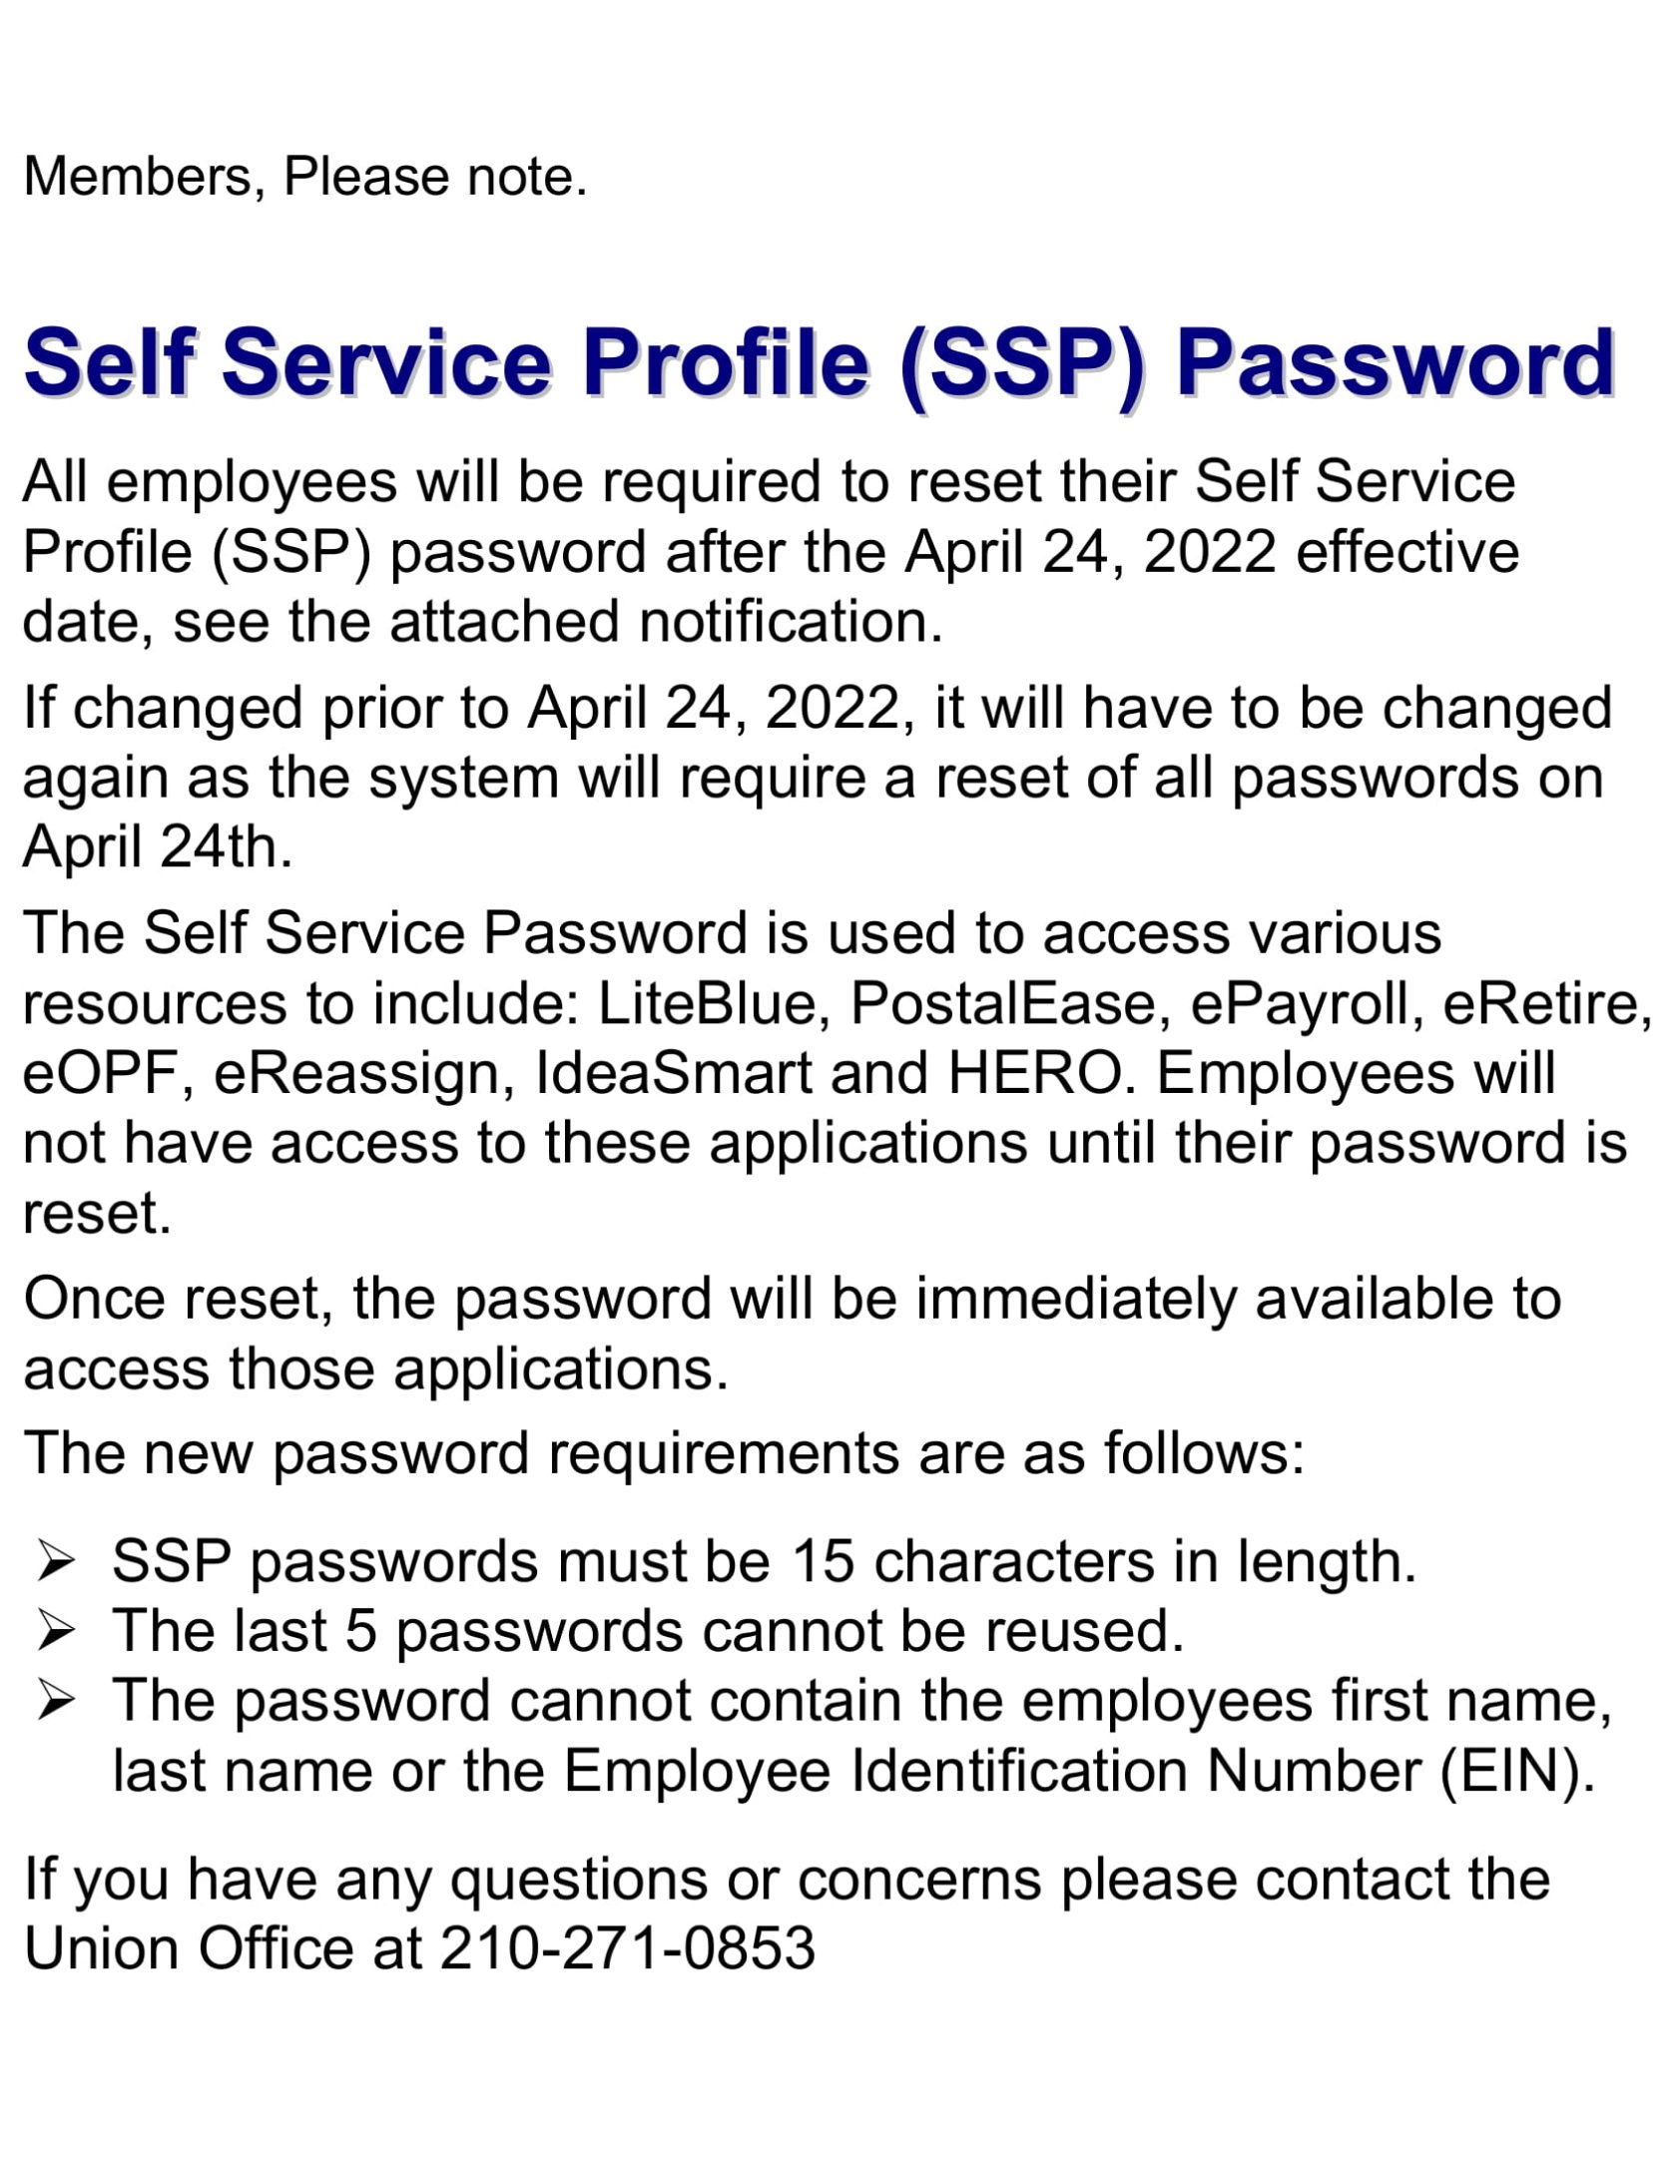 Self Service Profile Password - 